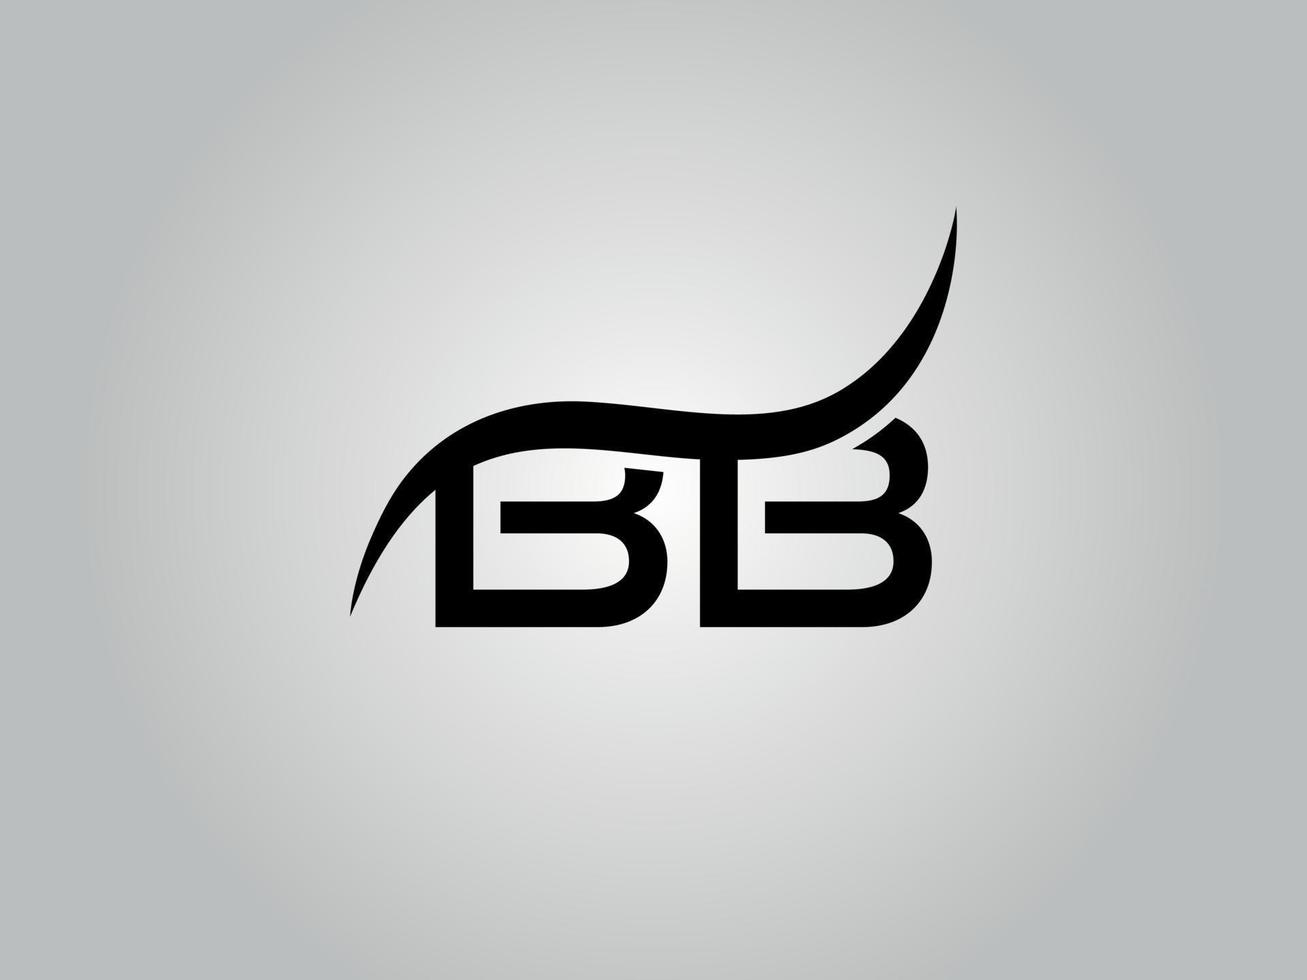 Buchstabe bb Logo Design kostenlose Vektordatei. vektor